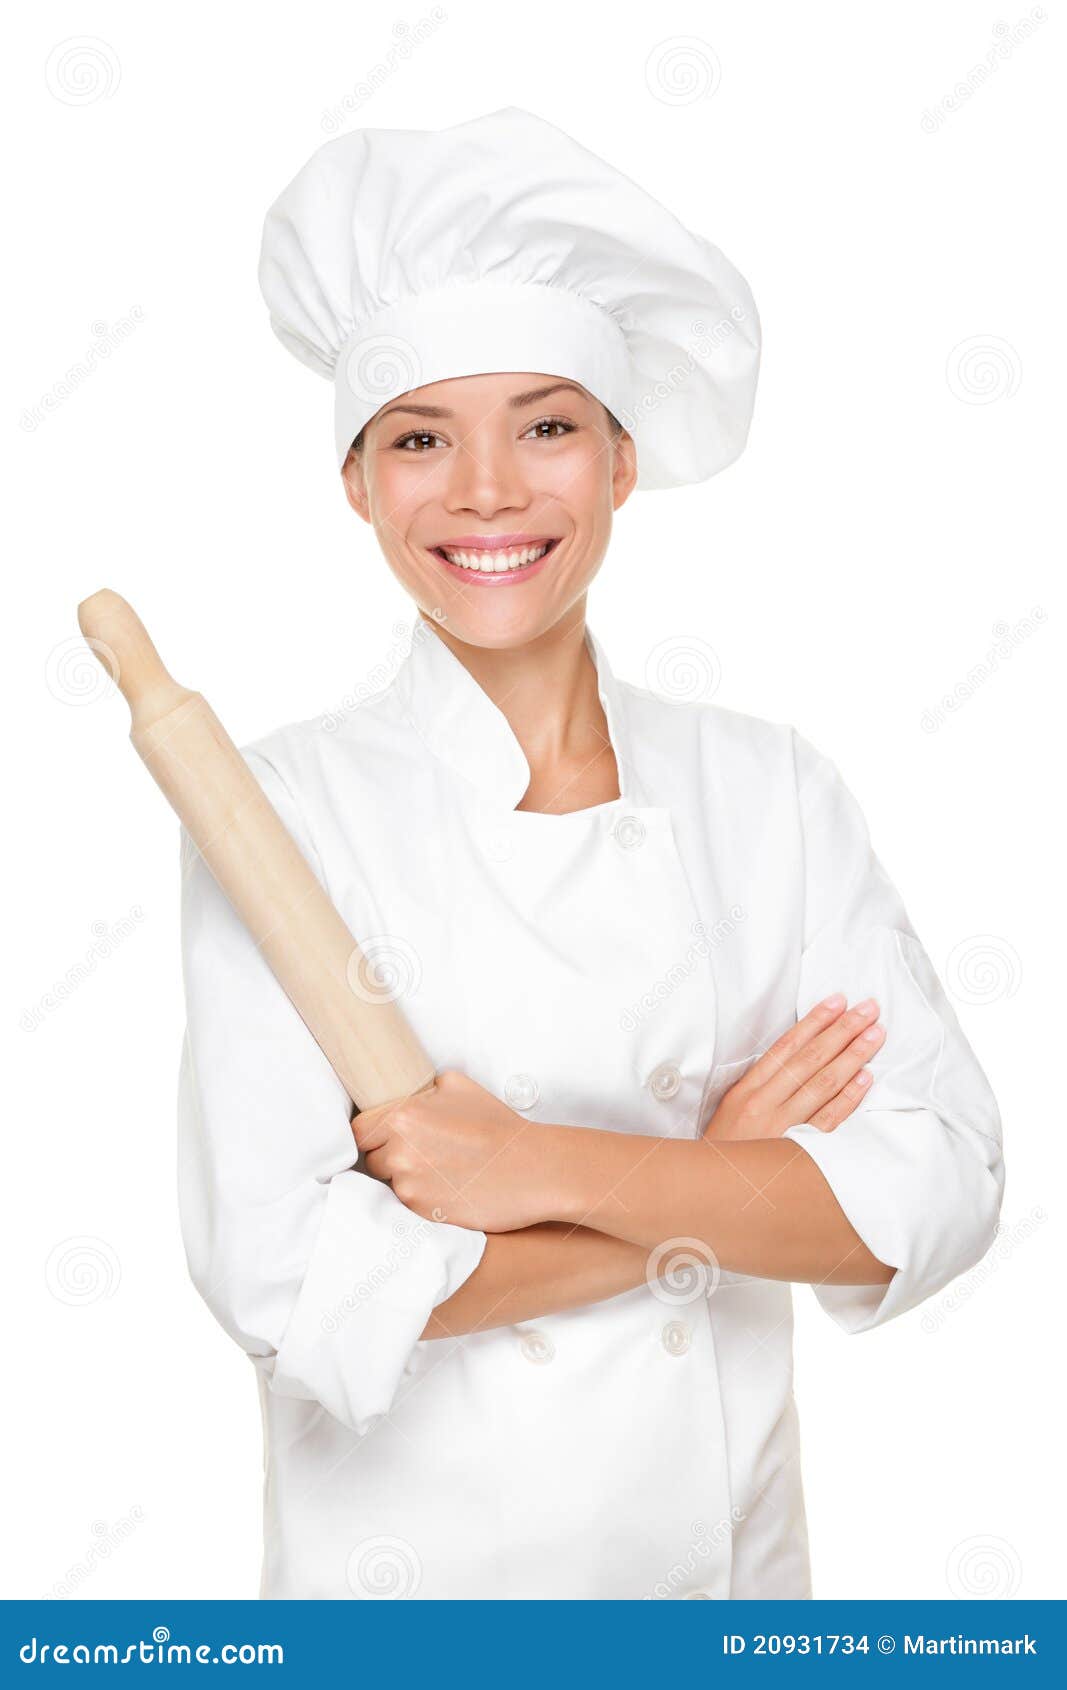 Baker / Chef woman stock photo. Image of confident, caucasian - 20931734